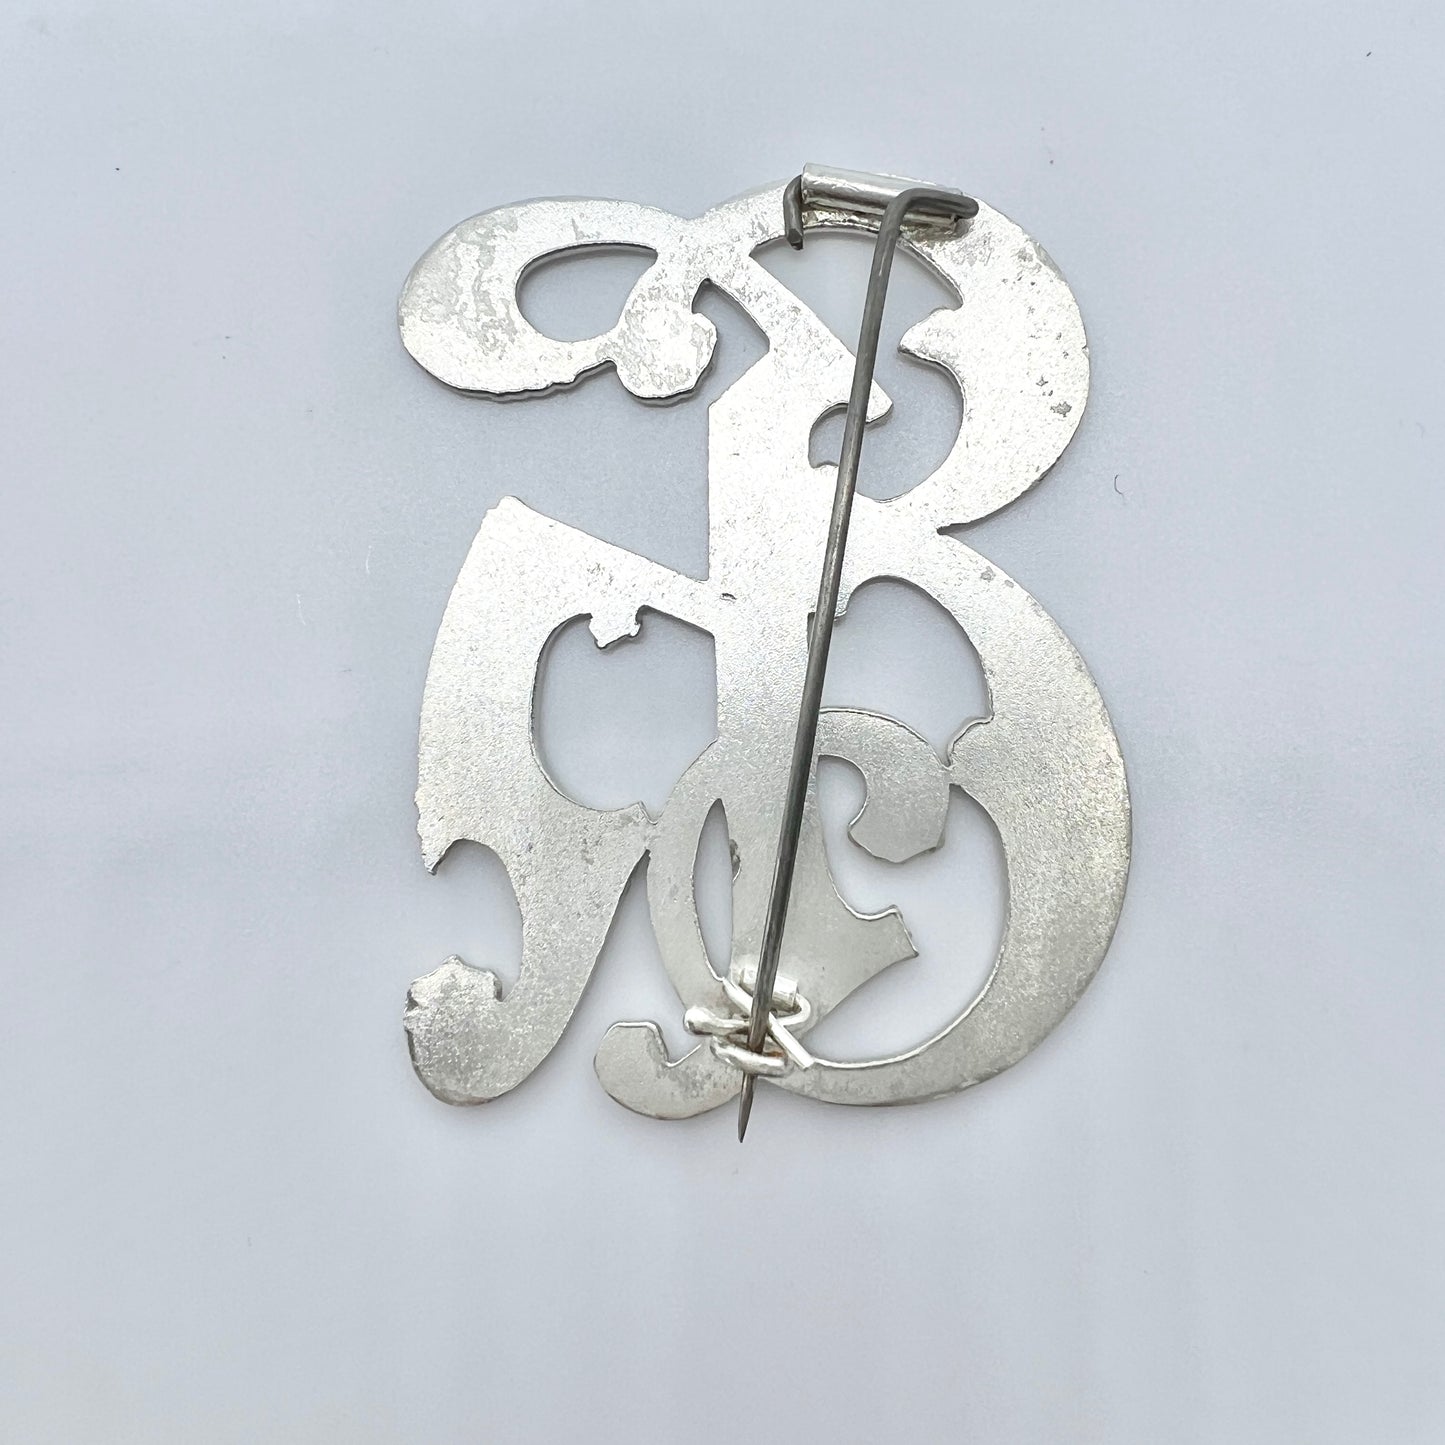 Antique Edwardian Solid Silver Monogram Brooch.